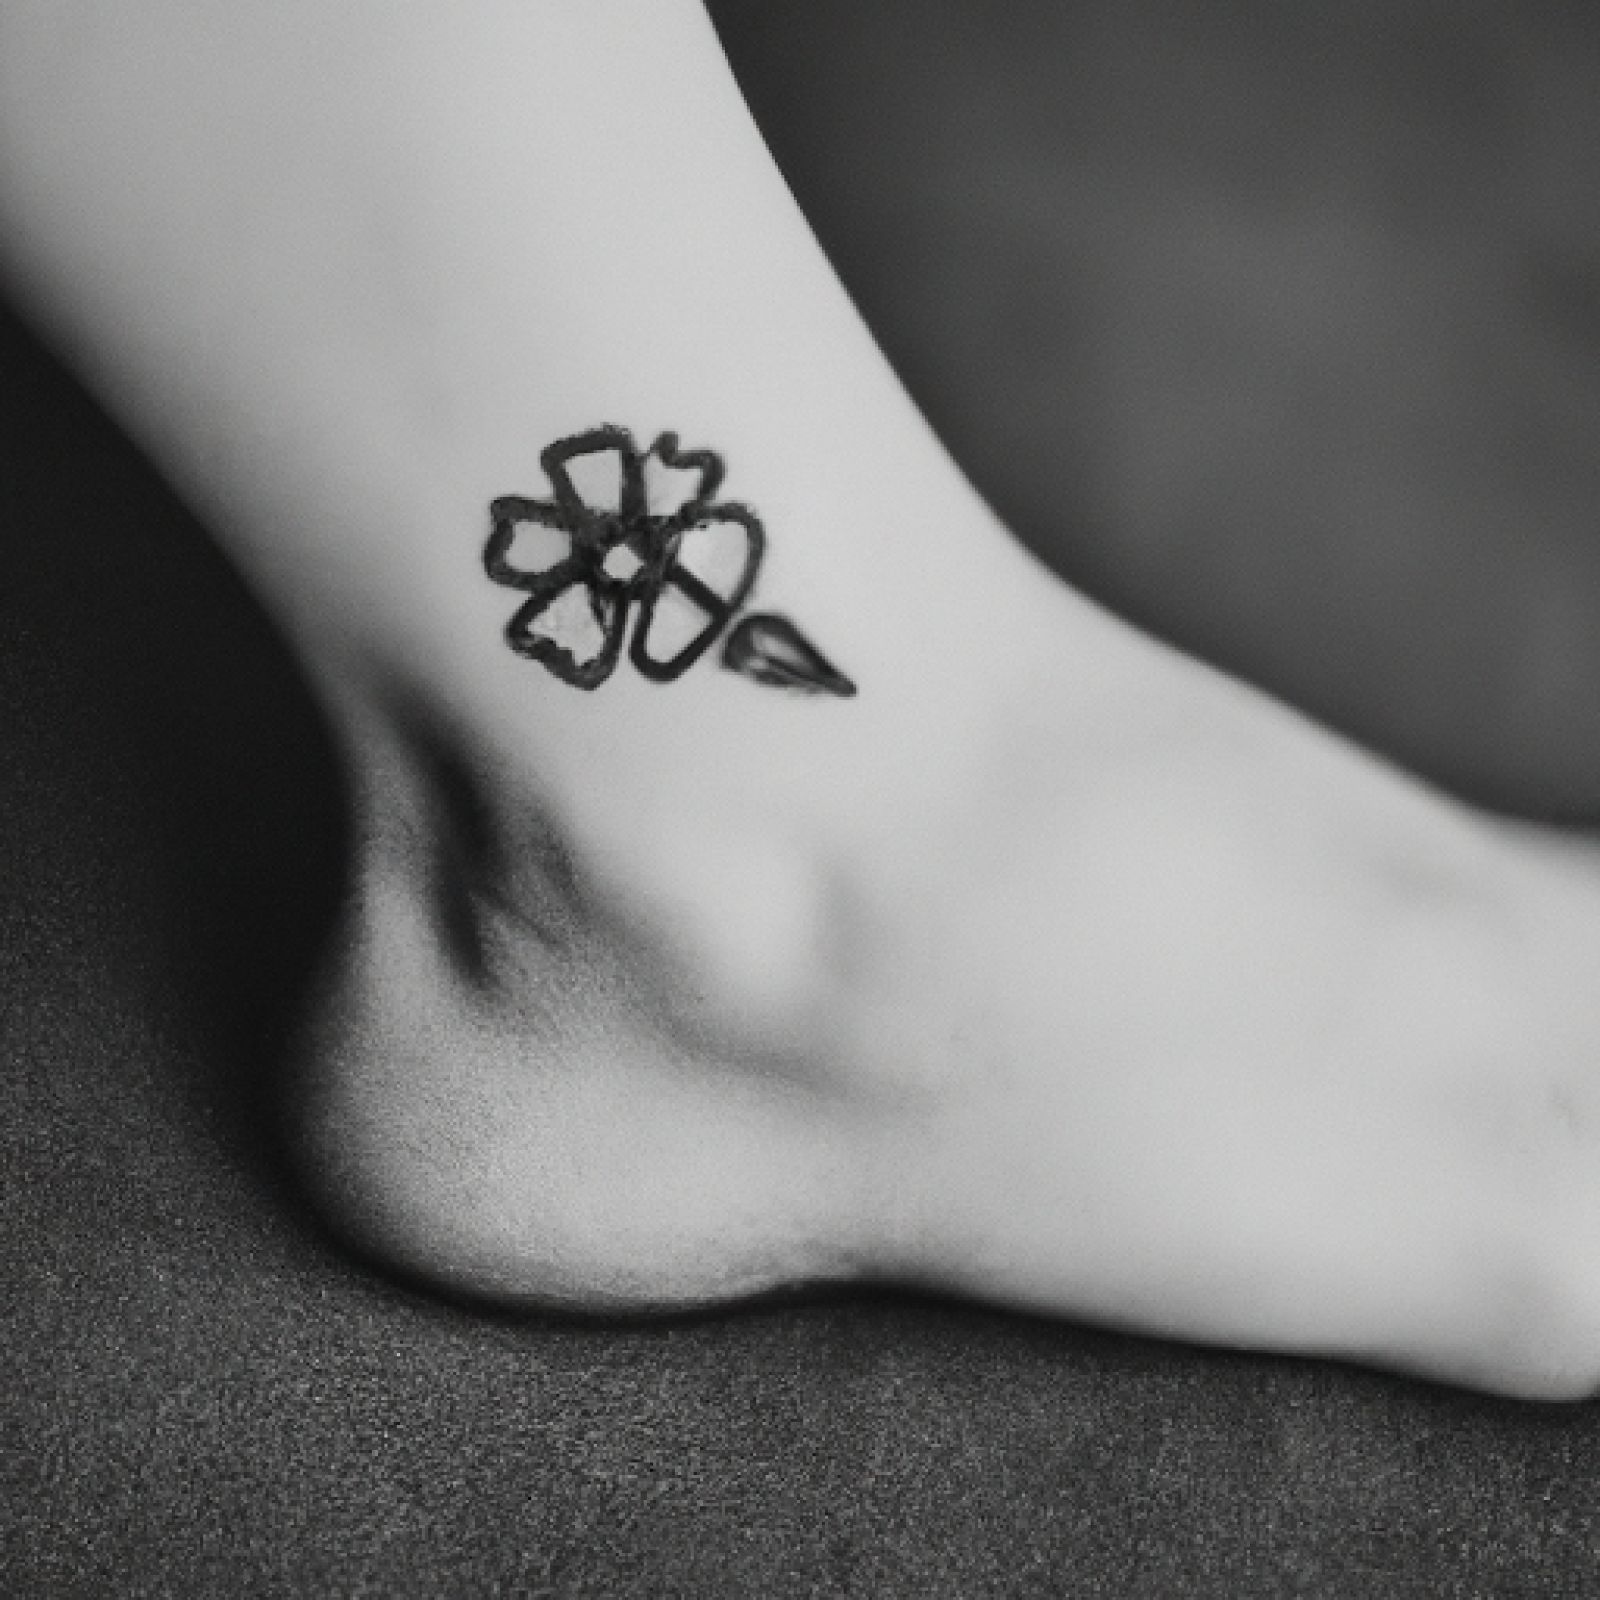 Flower tattoo on foot for women